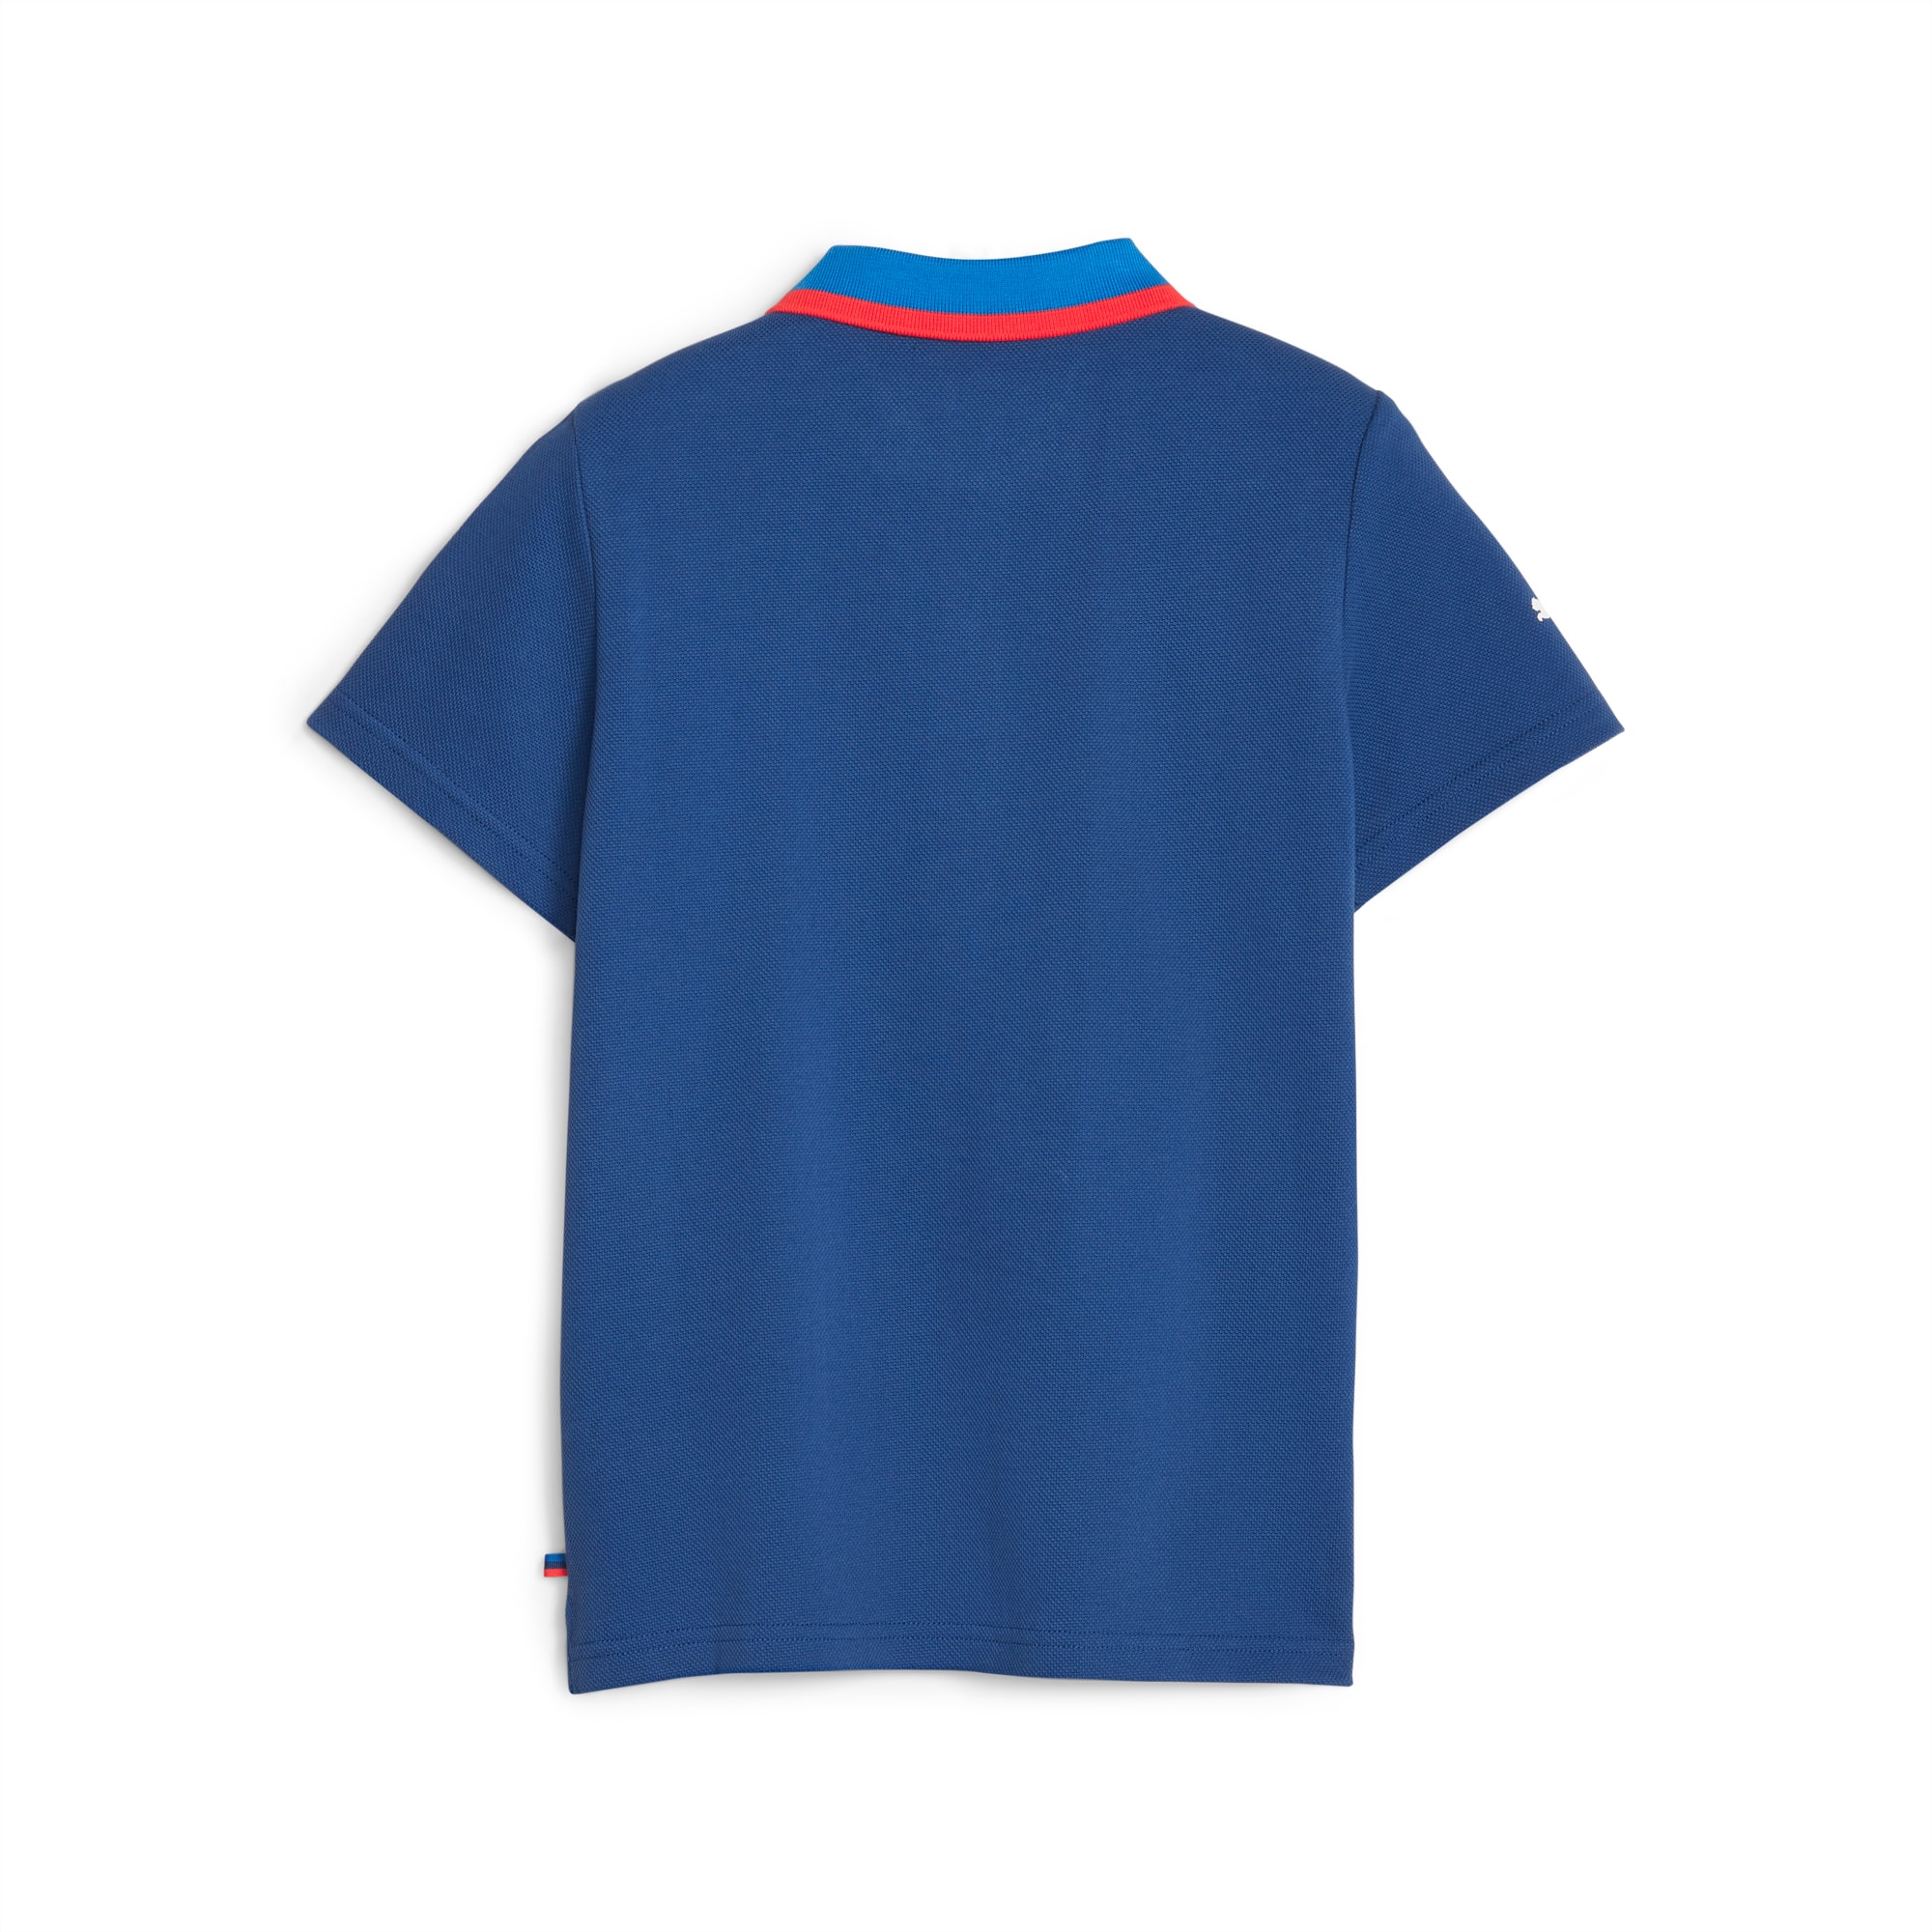 PUMA BMM M Motorsport Poloshirt Teenager Für Kinder, Blau, Größe: 116, Kleidung